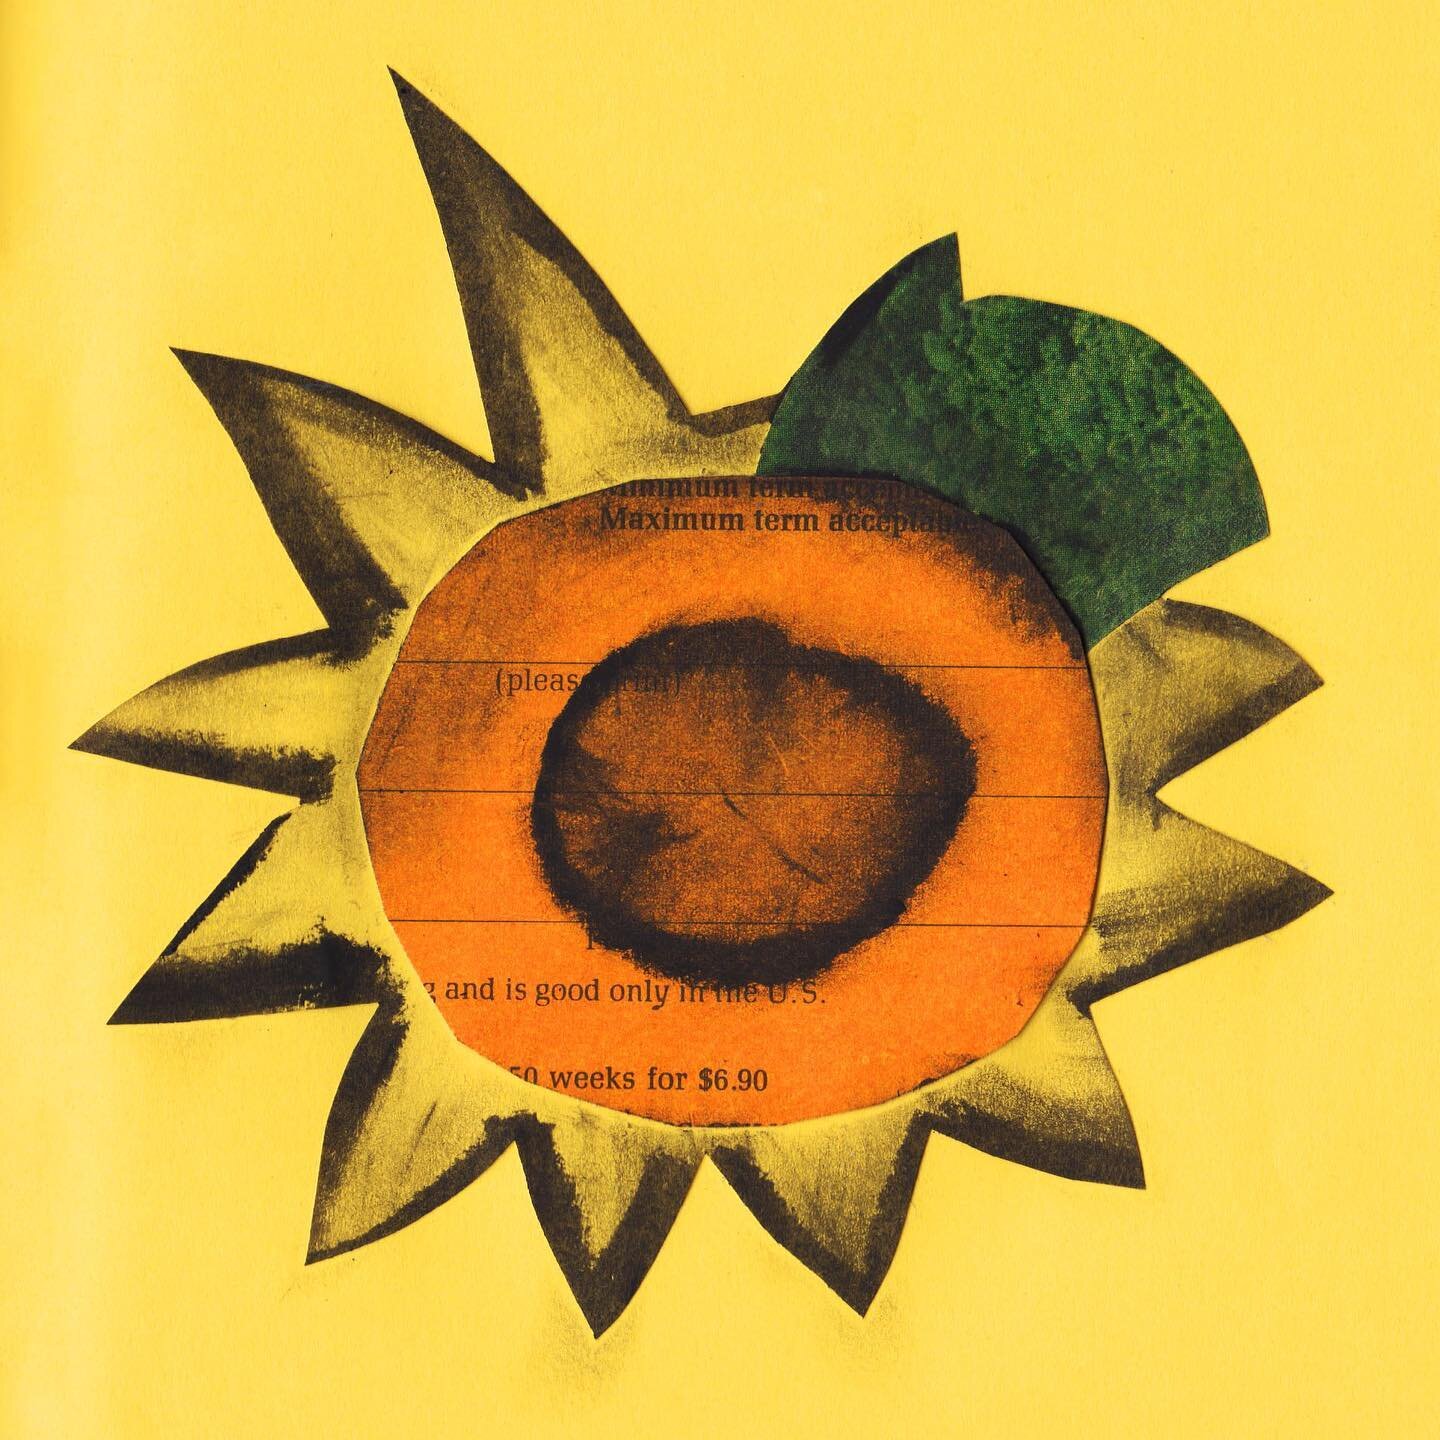 #sunflower 

#dailycollage #collage #papercollage #cutandpaste #japan #chuckpenny #graphic #illustration #art #artwork  #コラージュ #コラージュアート #切り絵 #貼り絵 #イラスト #takaharushimizu #C_Expo